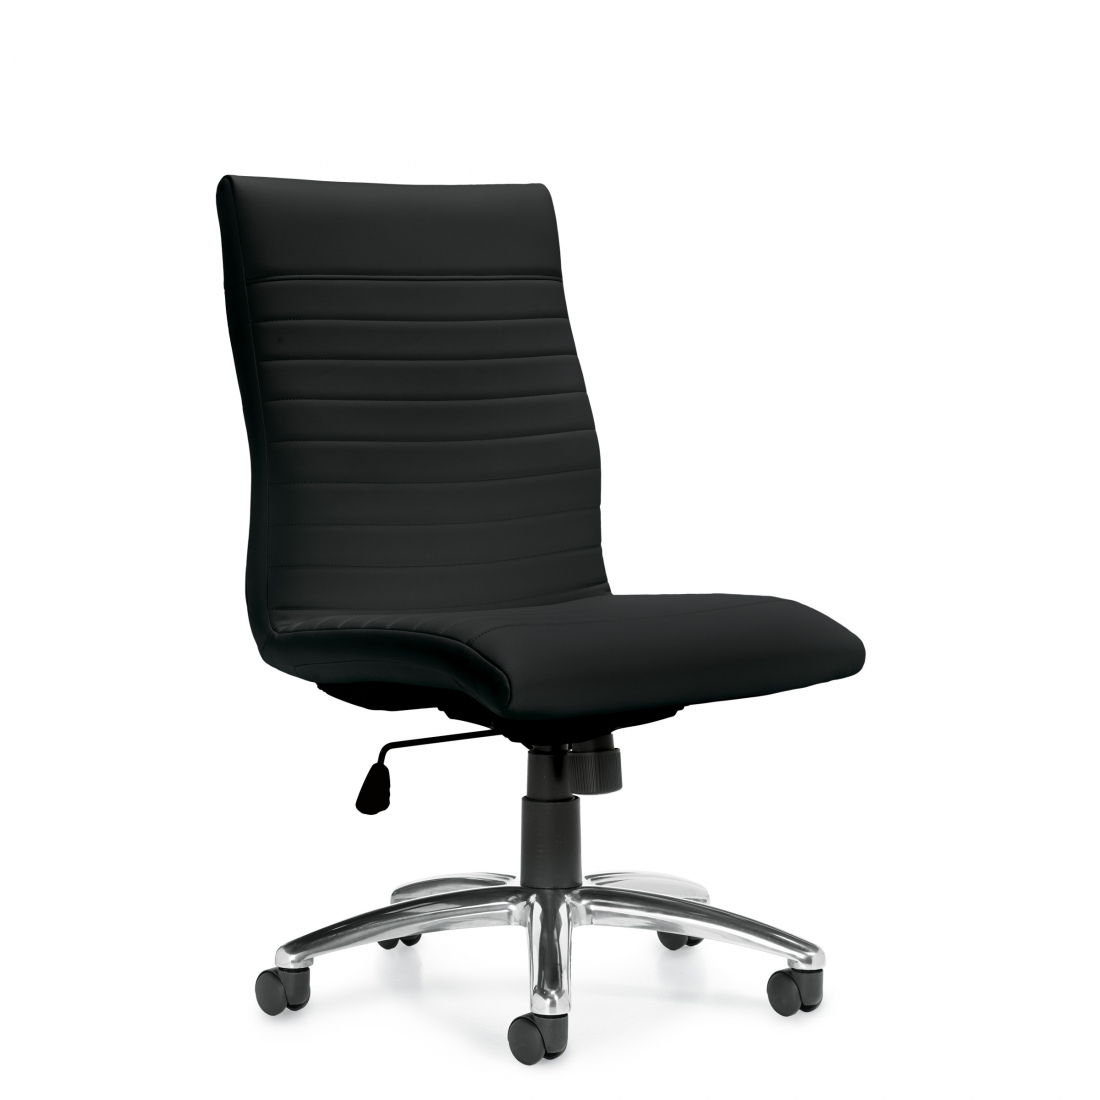 Luxhide Executive Chair - Armless